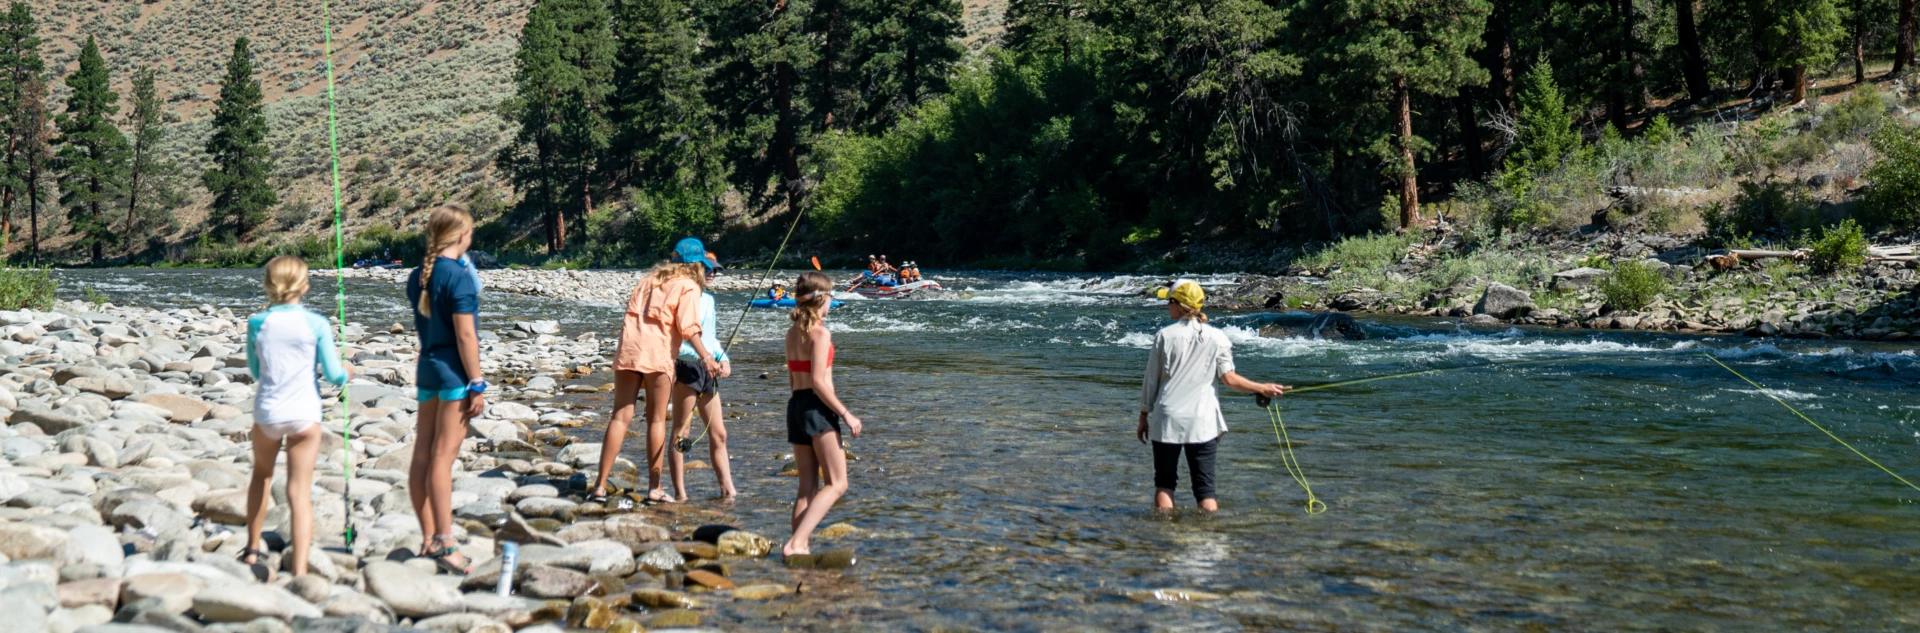 Planning a Salmon River trip